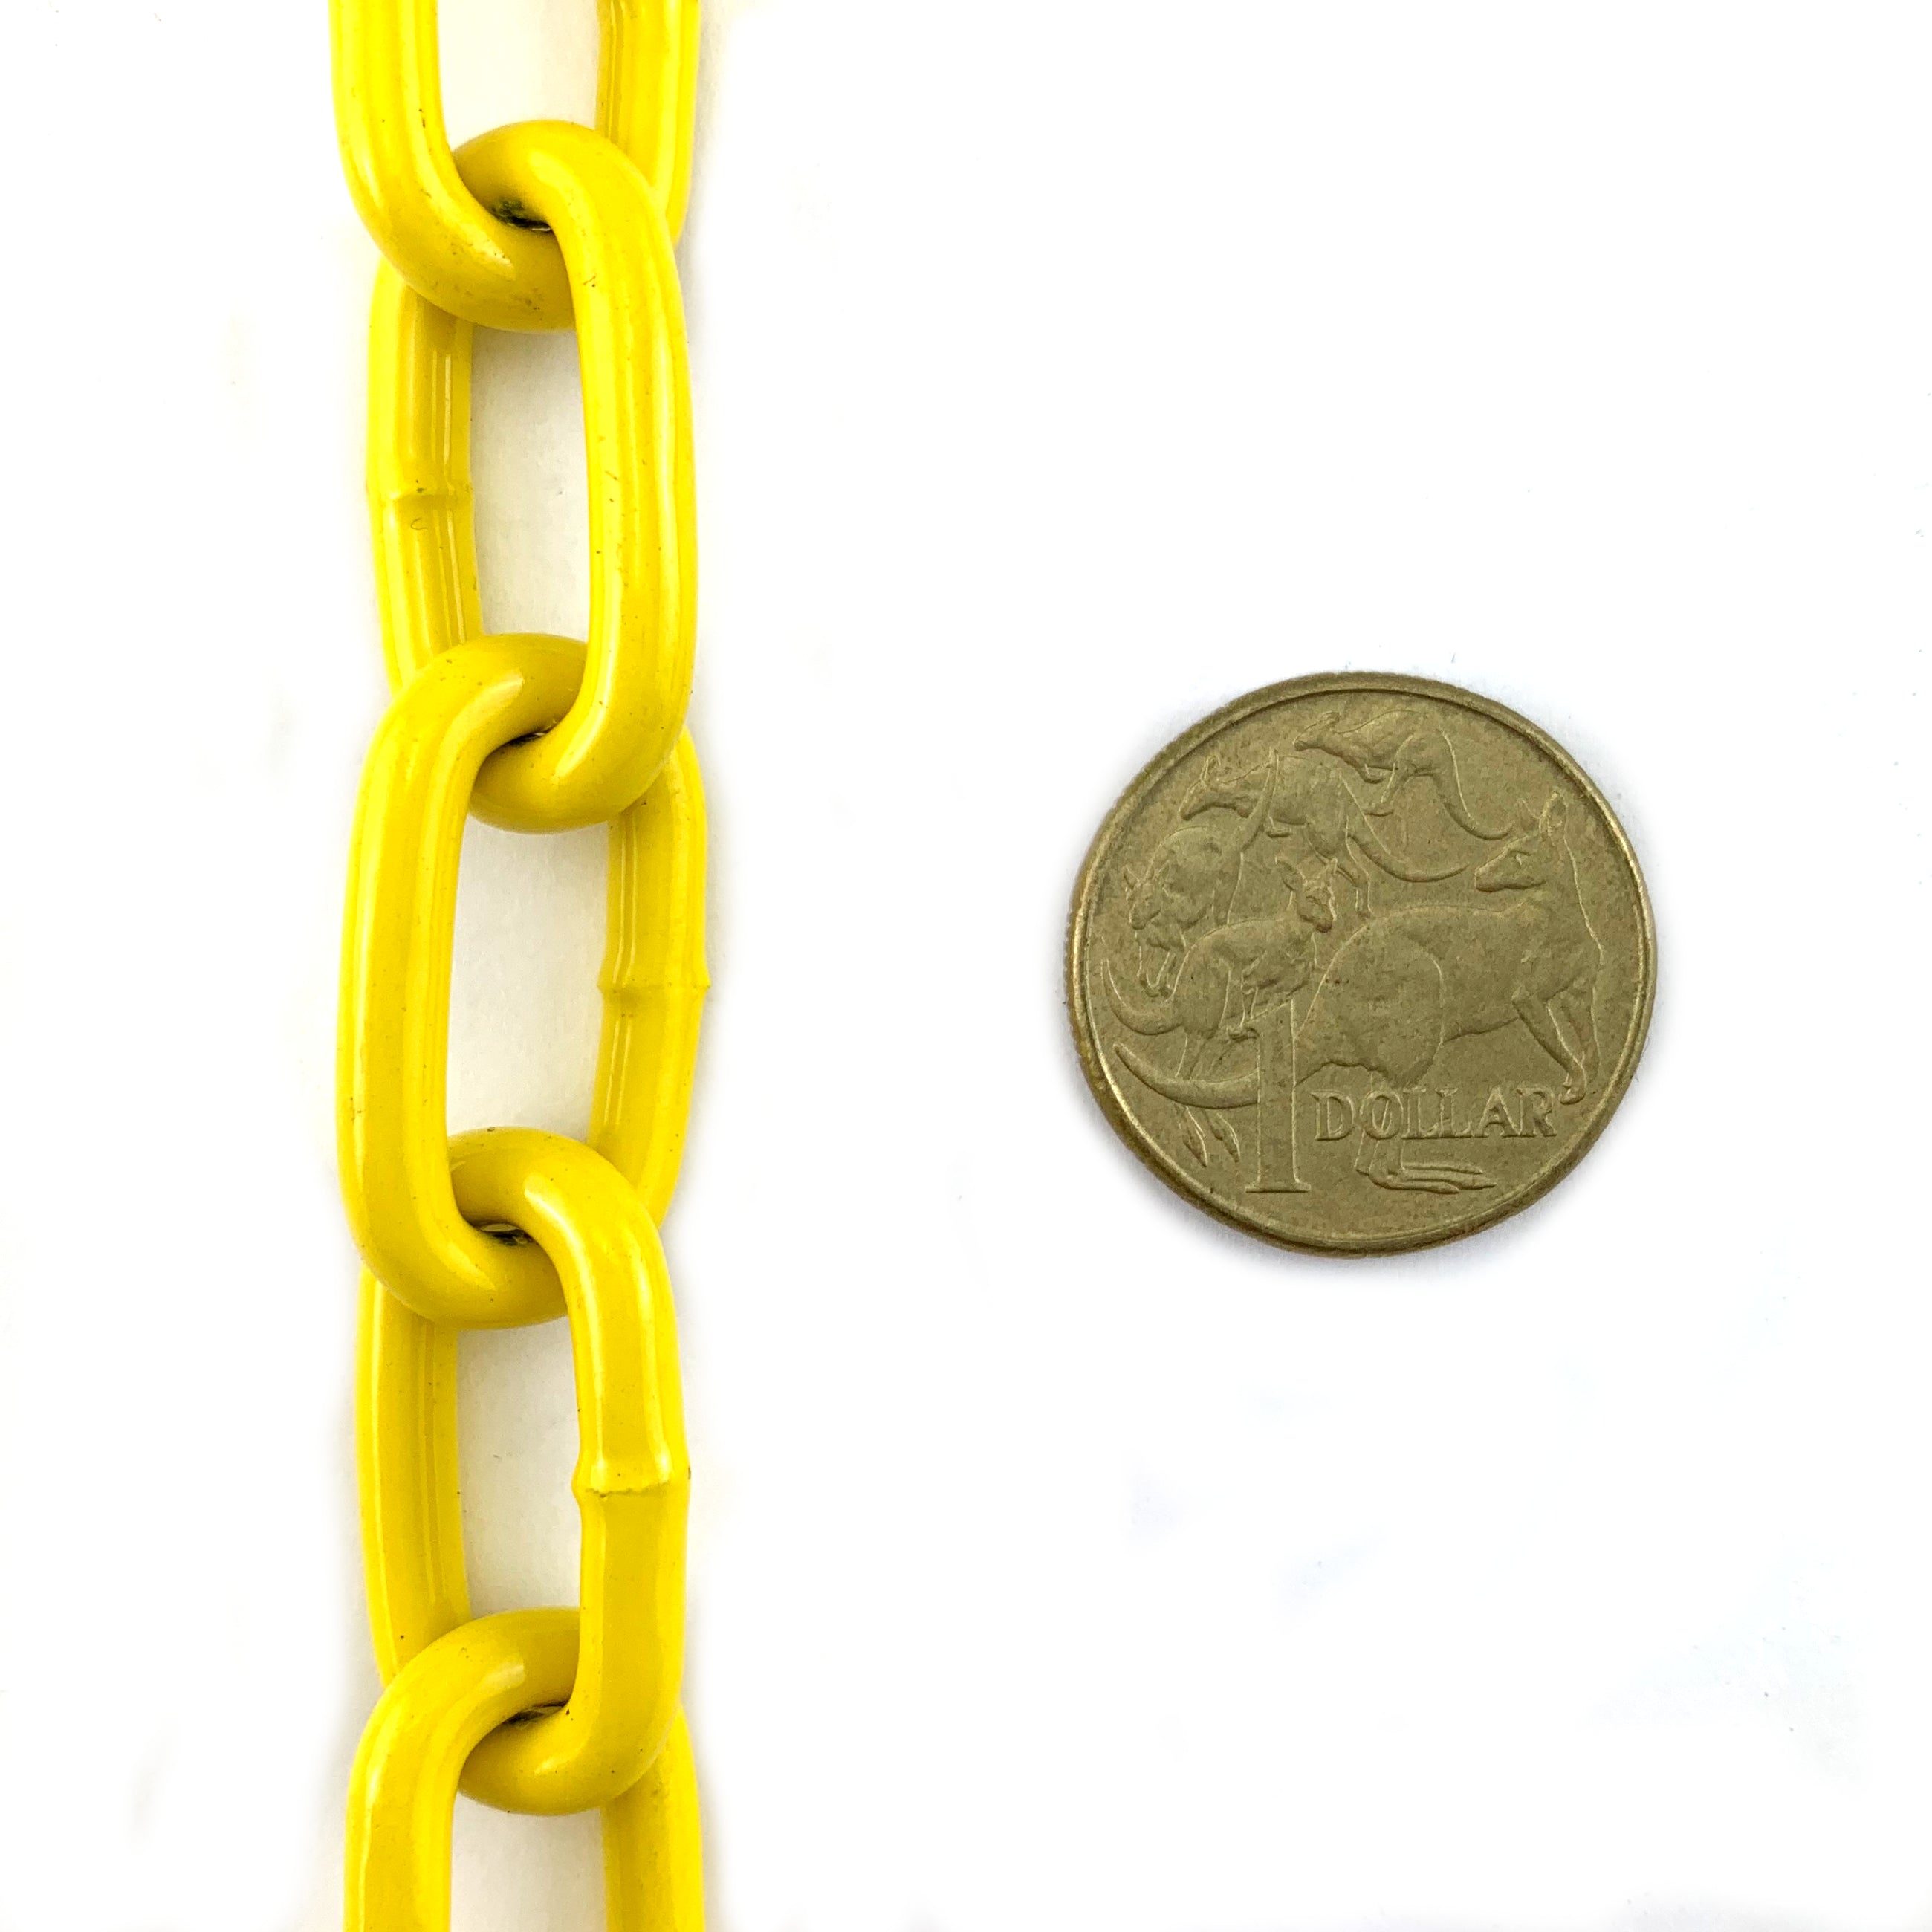 Yellow powder coated welded steel chain, size 4mm in a 25kg bucket. Melbourne, Australia.